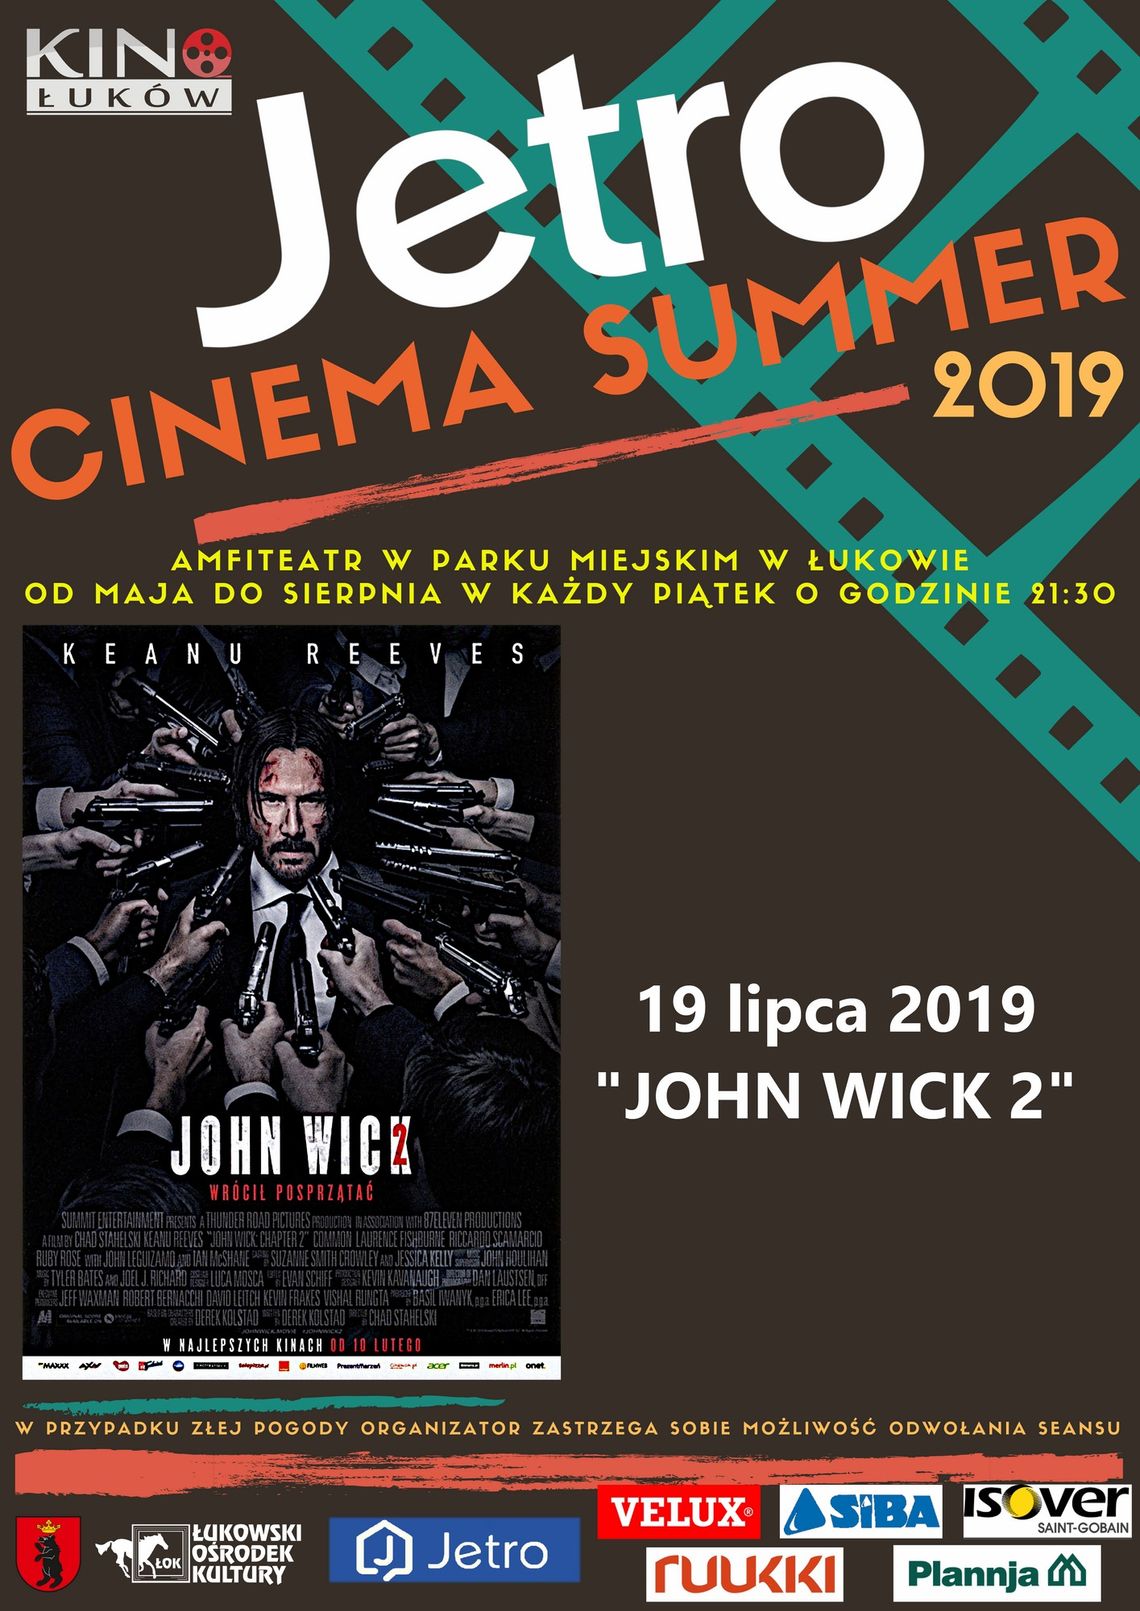 JETRO CINEMA SUMMER - „John Wick 2” /19 lipca 2019